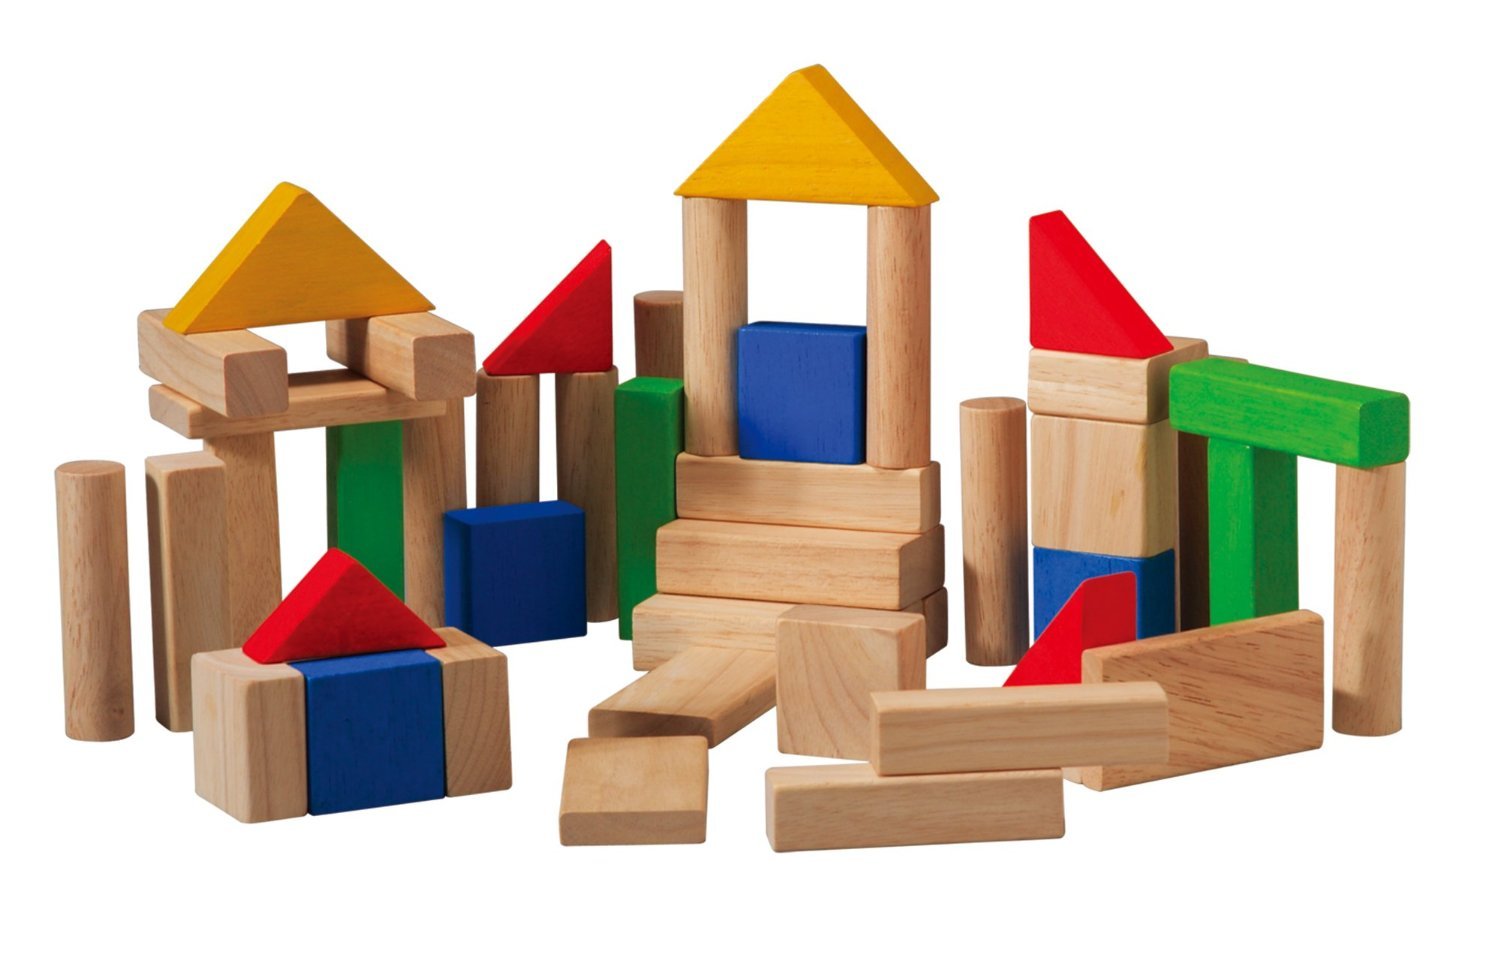 Wood Blocks Toy Hotsell, 51% OFF | www.revistatsudec.cl